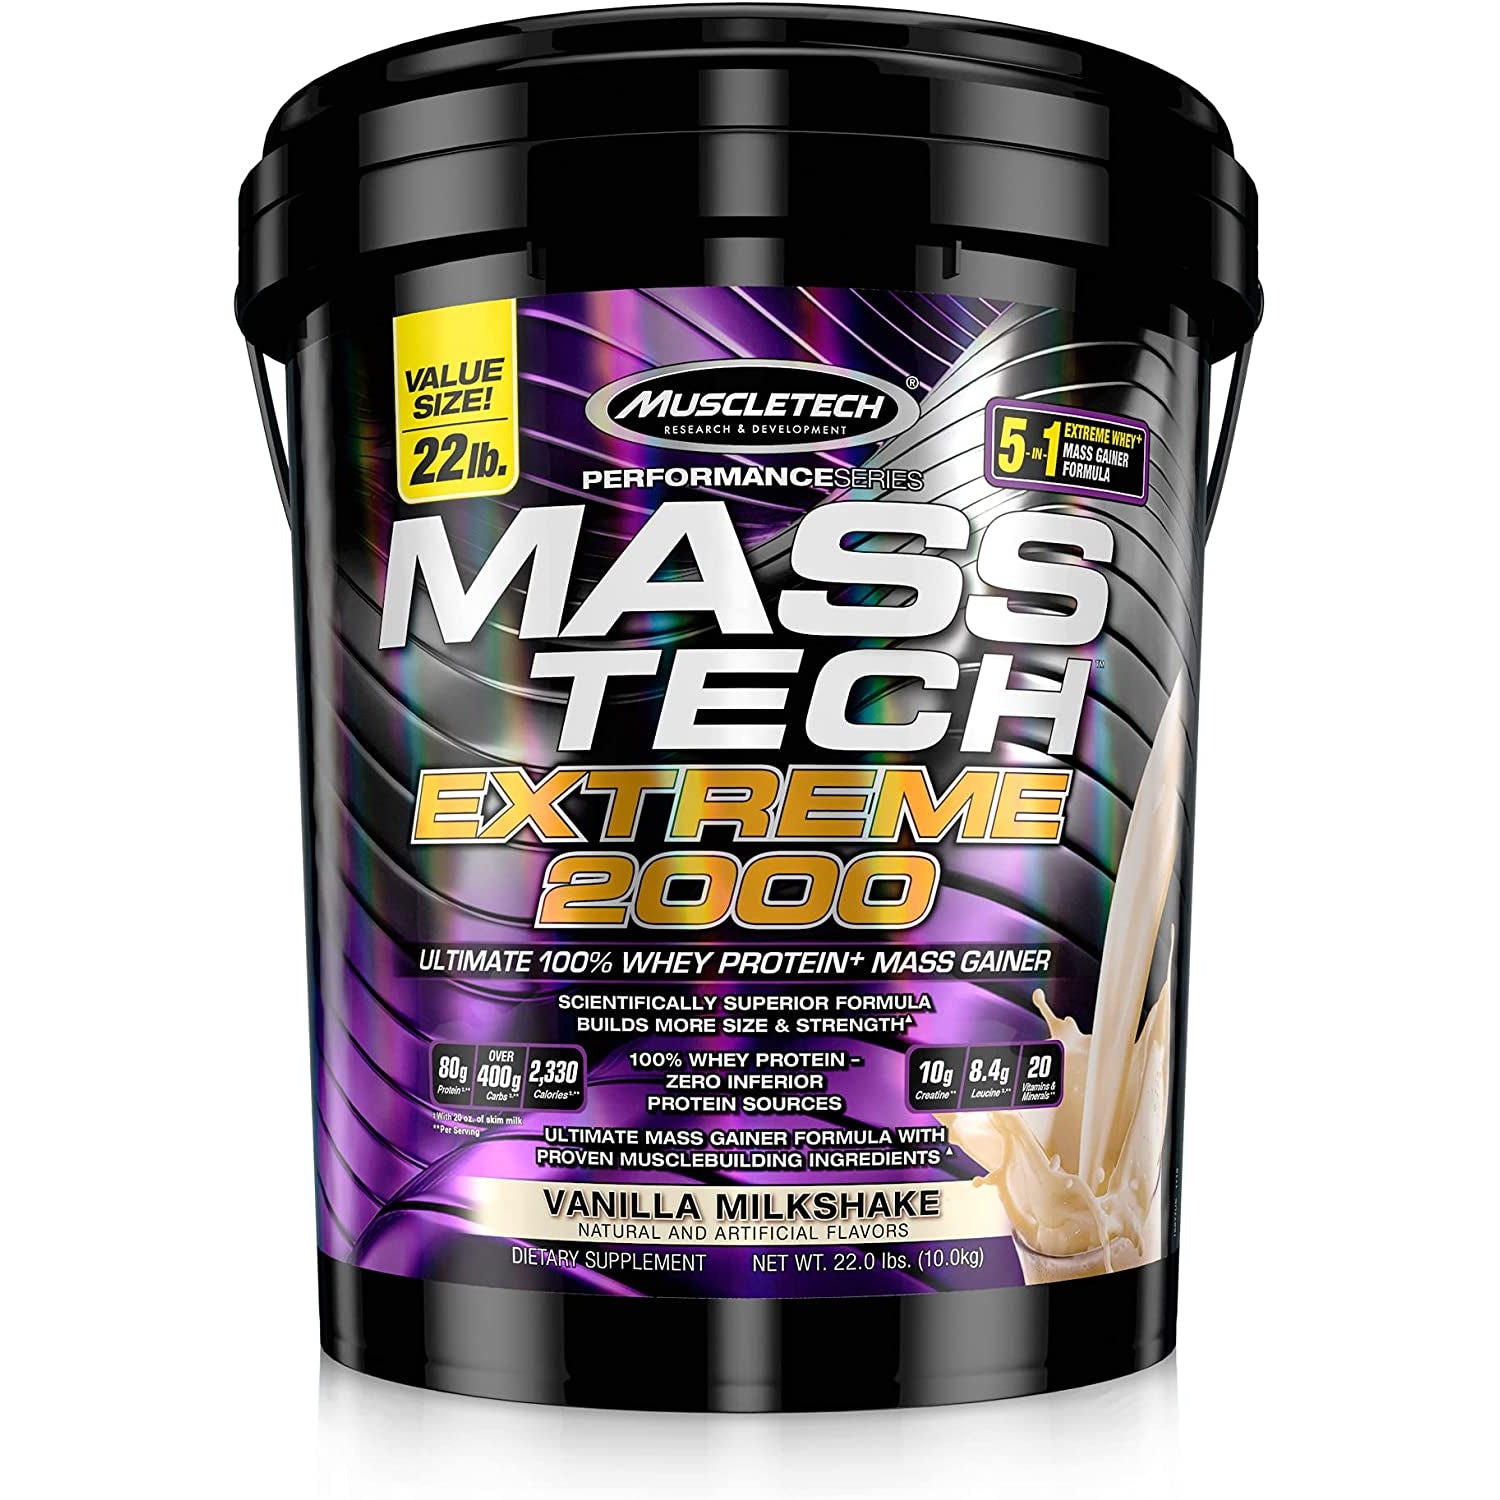 Mass-Tech Extreme 2000 - Muscletech